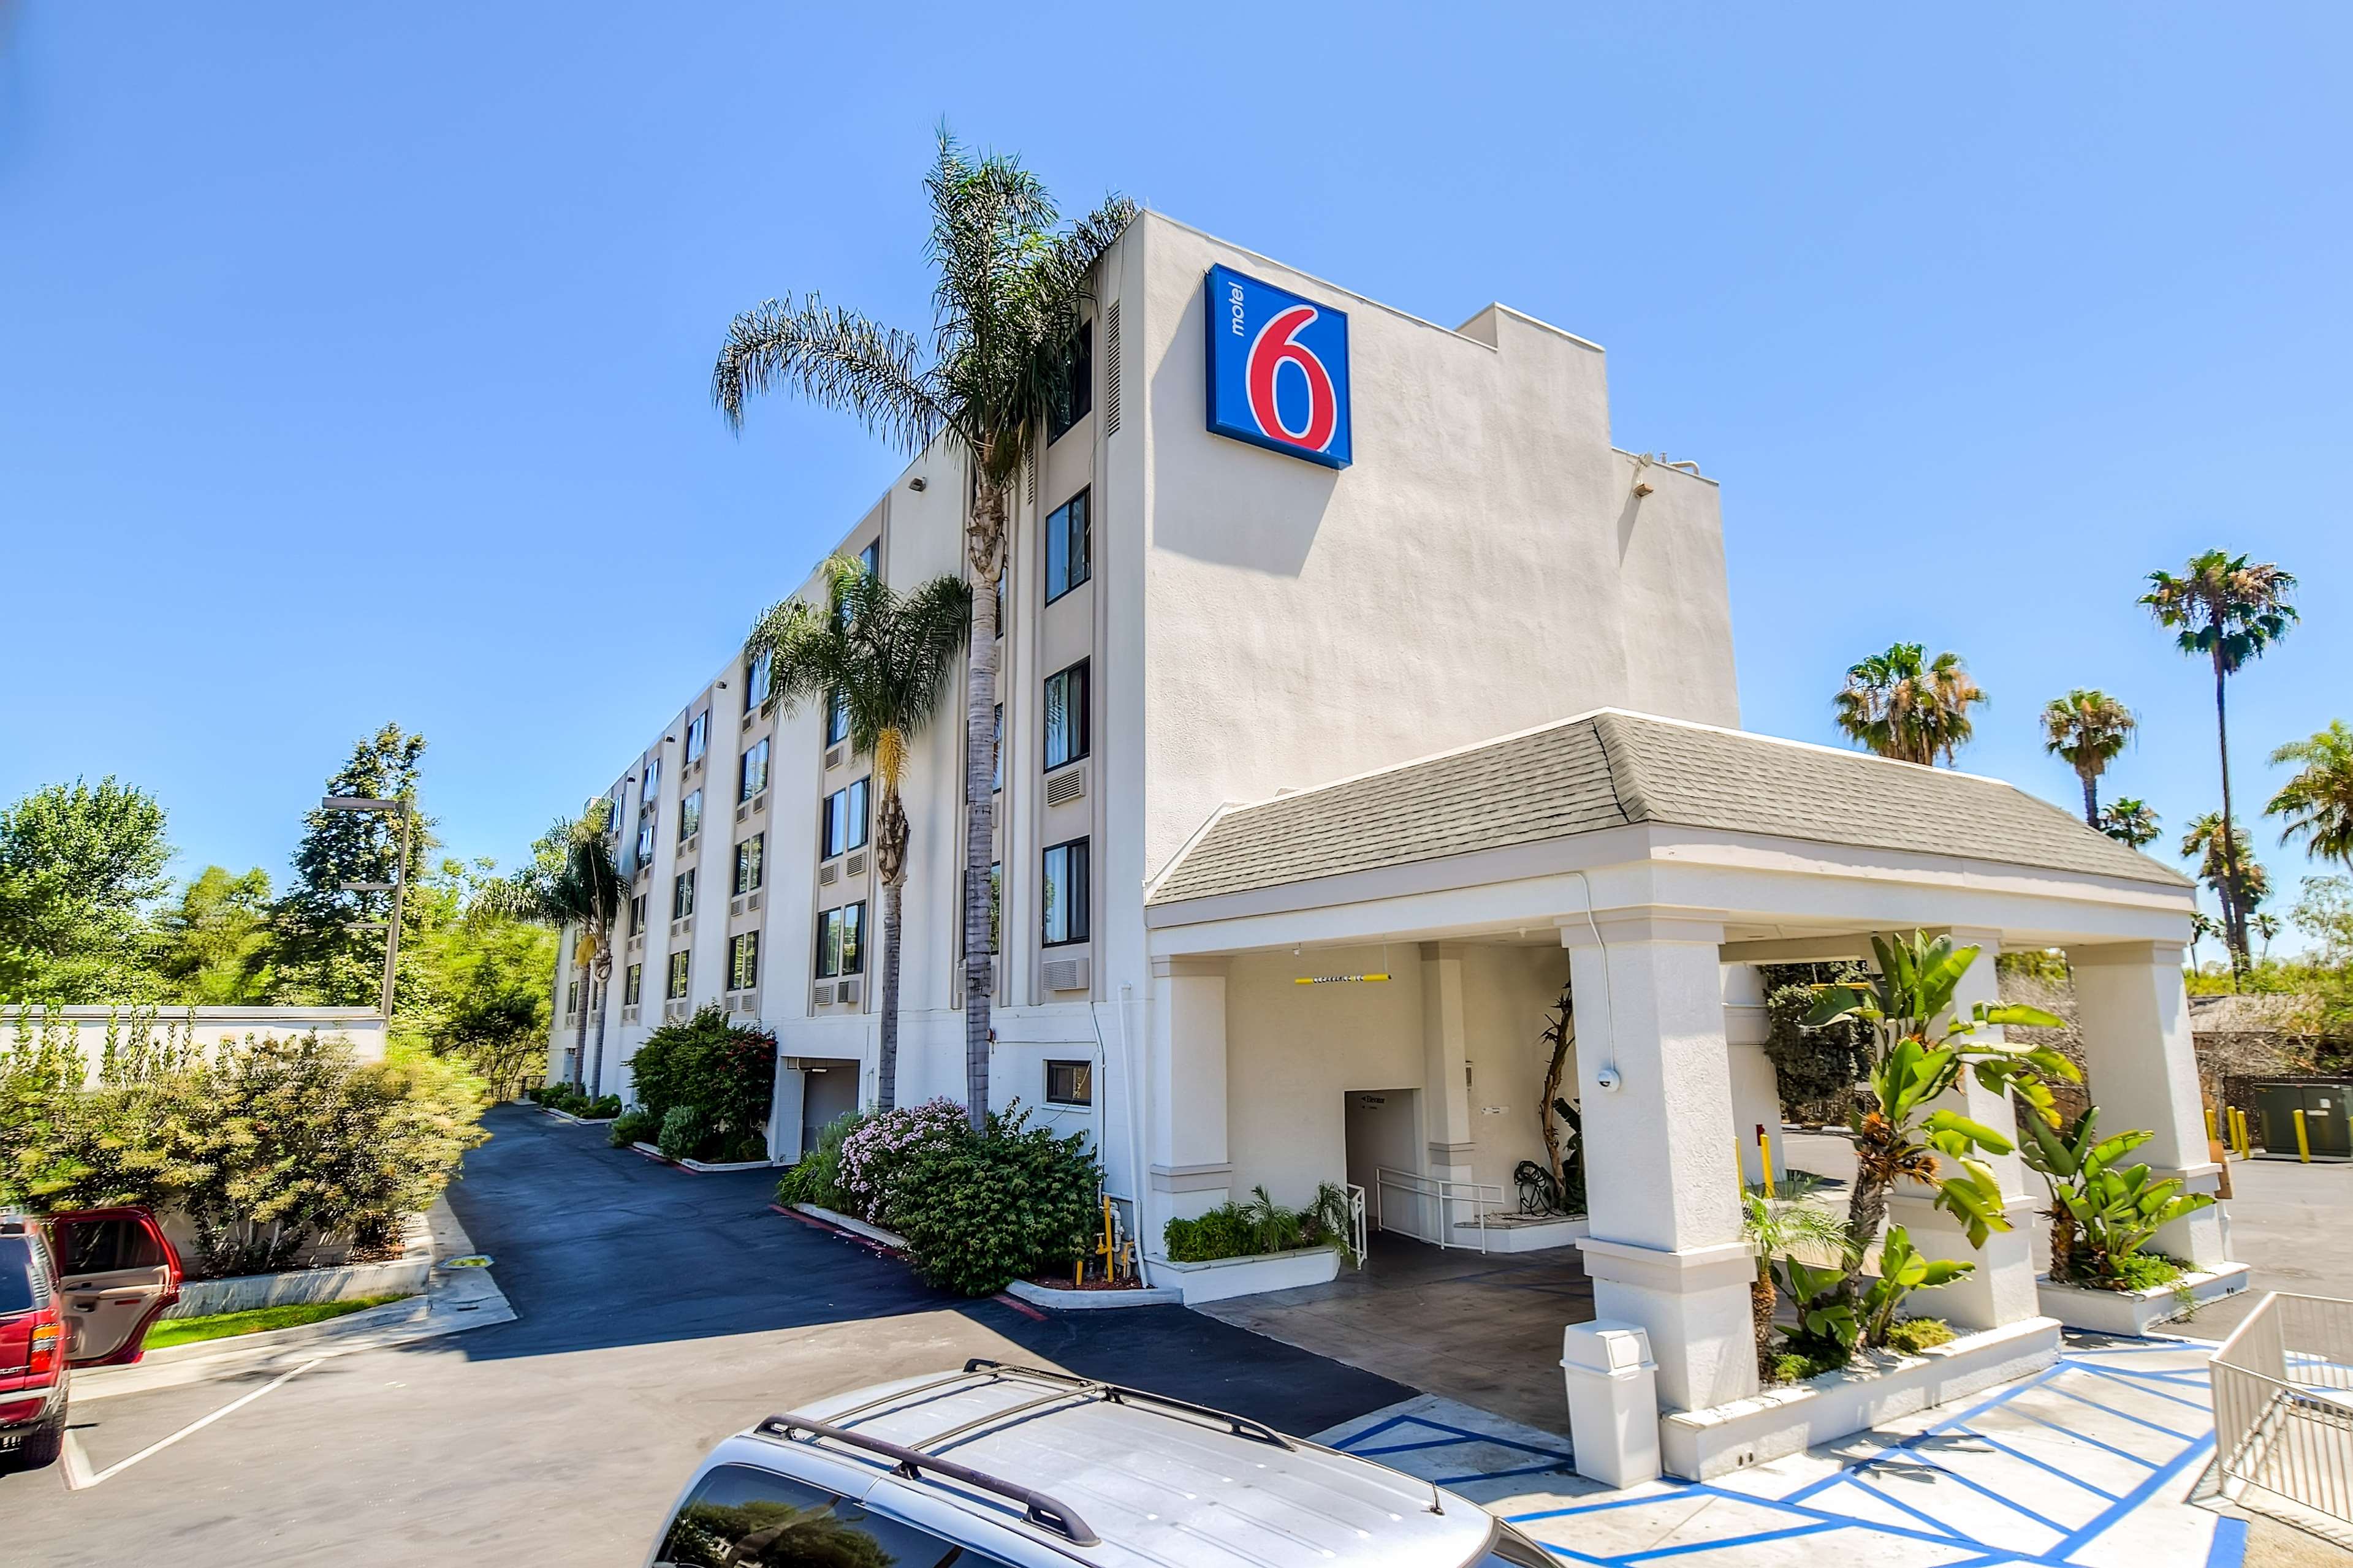 Motel 6 San Diego - Circle - Mission Valley